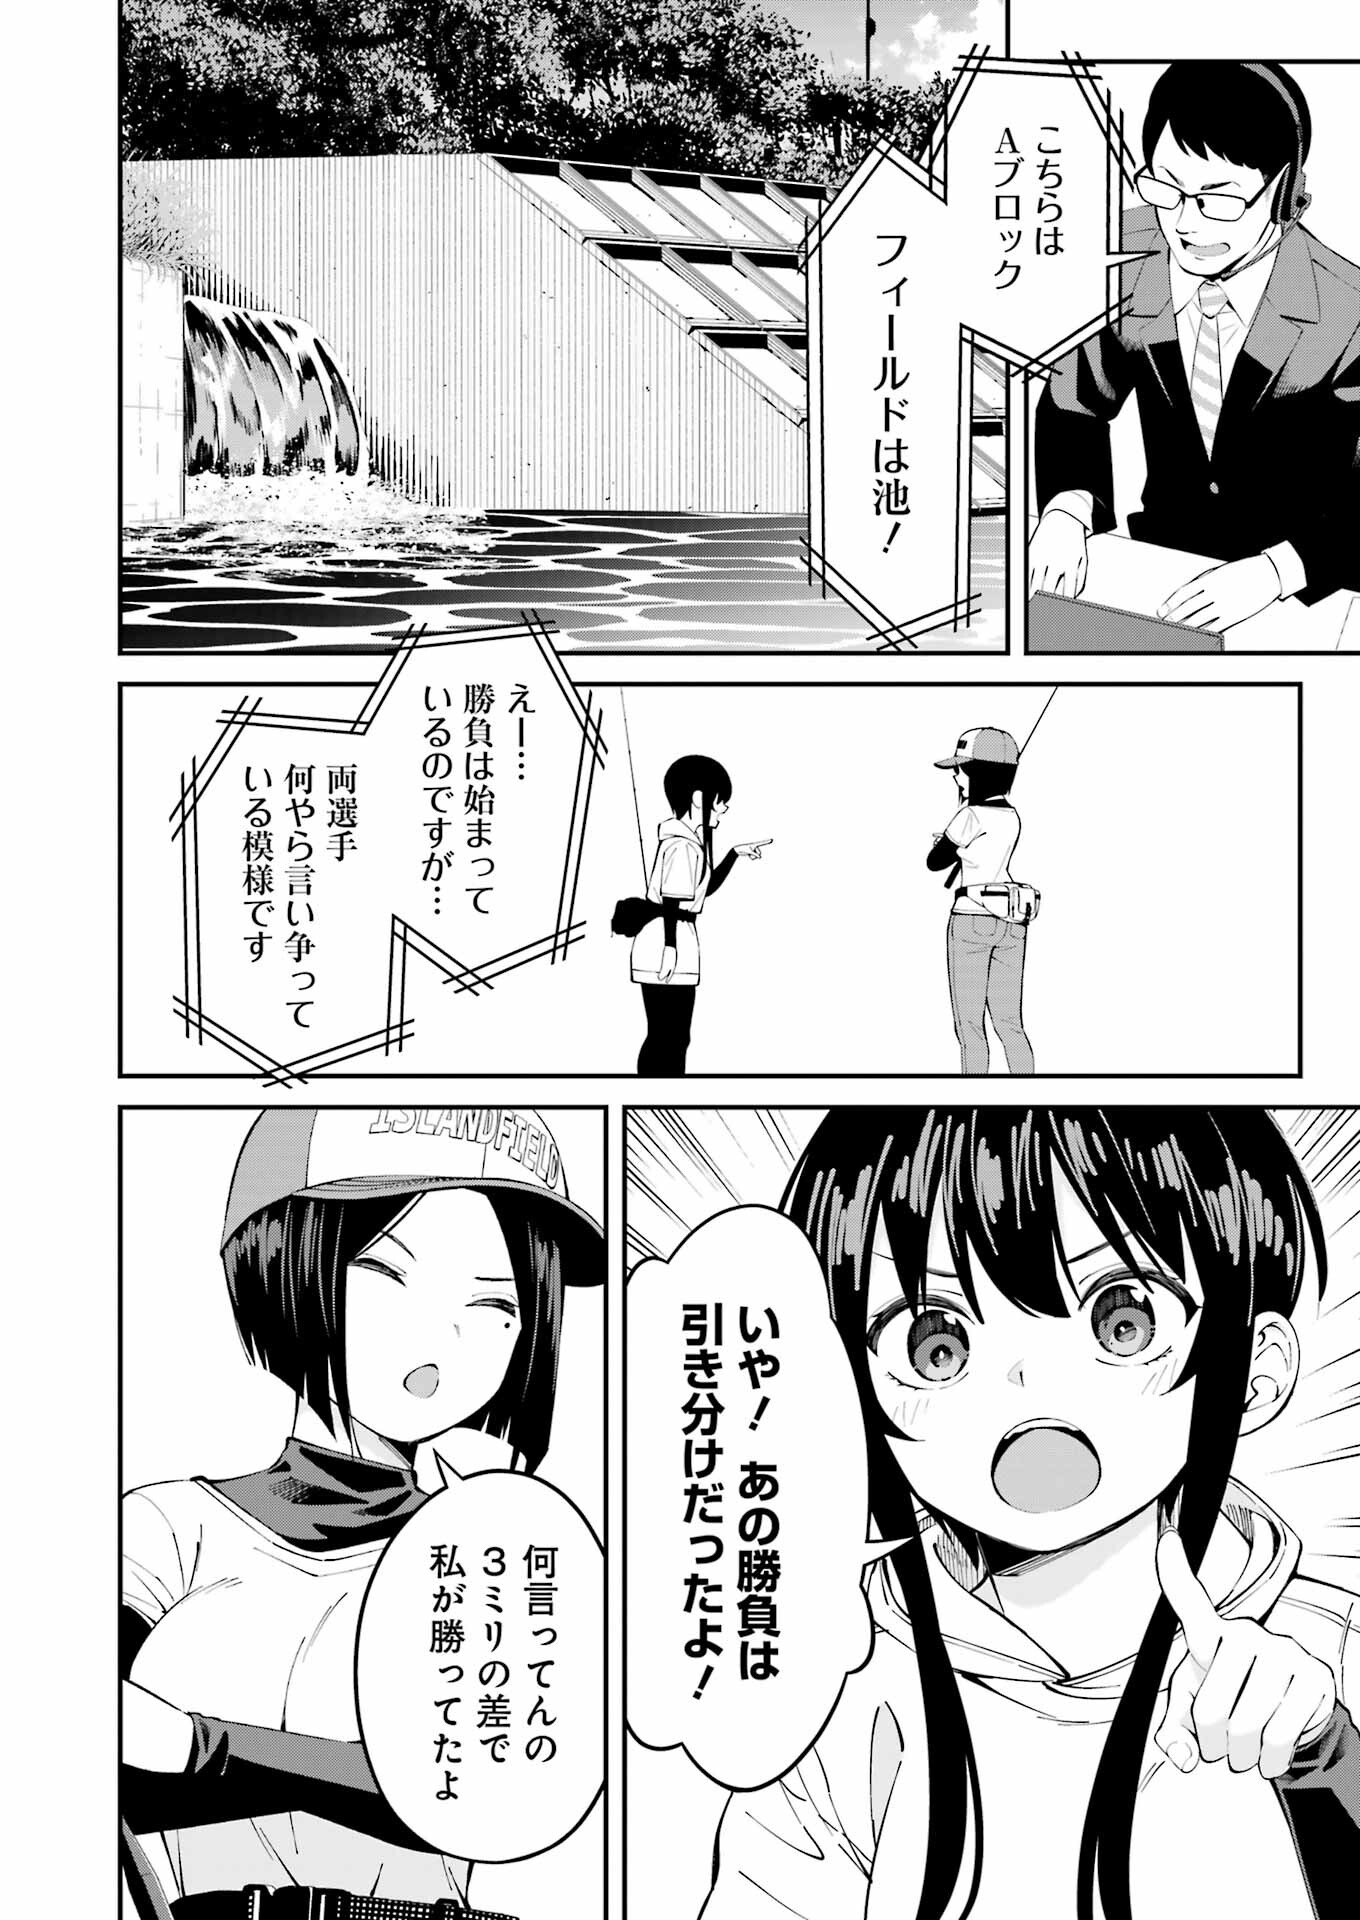 Tsuri Komachi - Chapter 53 - Page 8